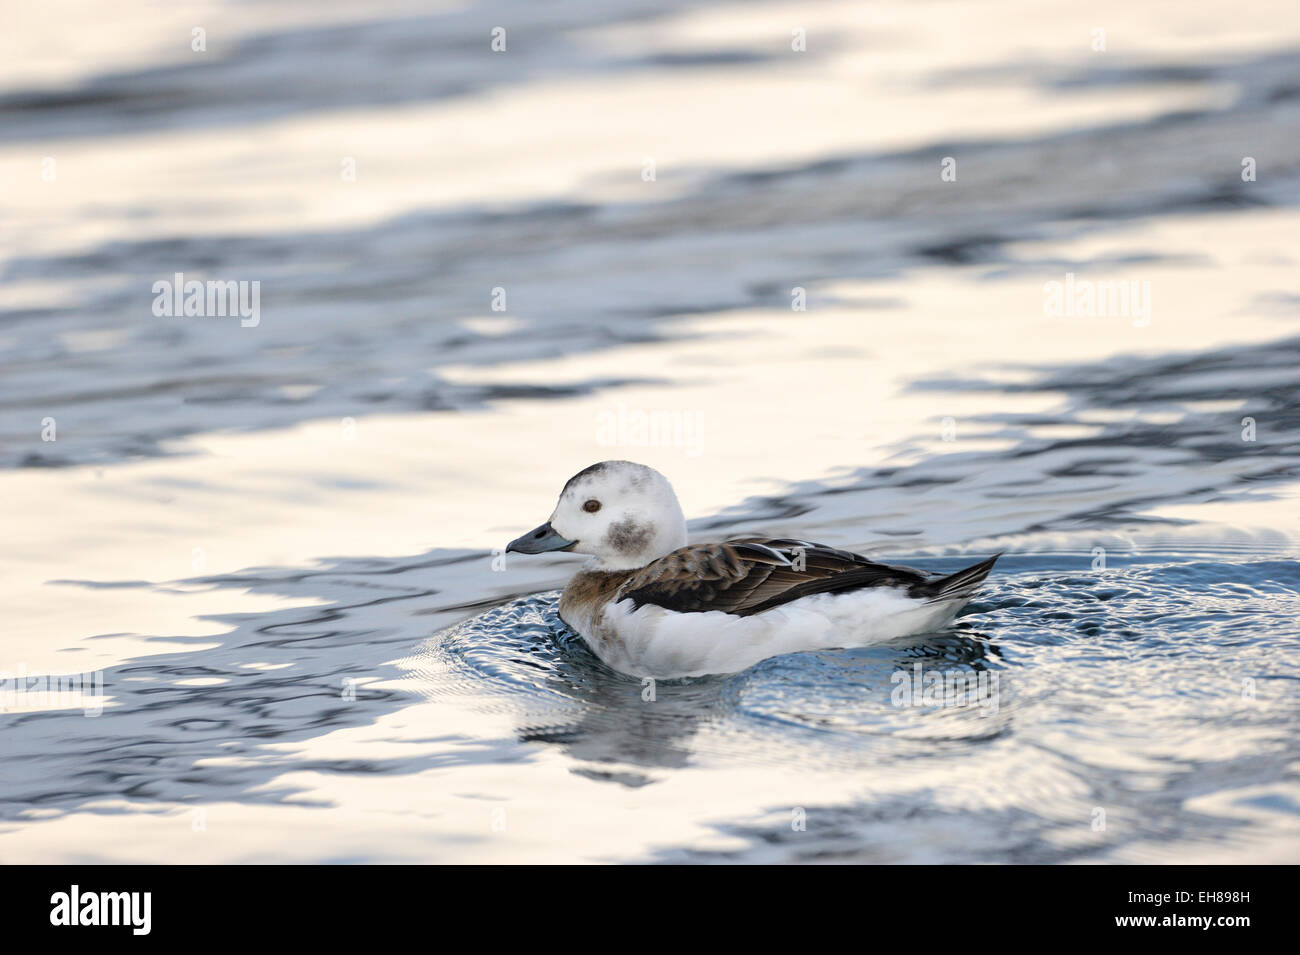 Longtailed-Duck (Clangula hyemalis), femmina, nuotare in acqua colorfull, riflessa nell'acqua, Vadsö, penisola Varanger, n. Foto Stock